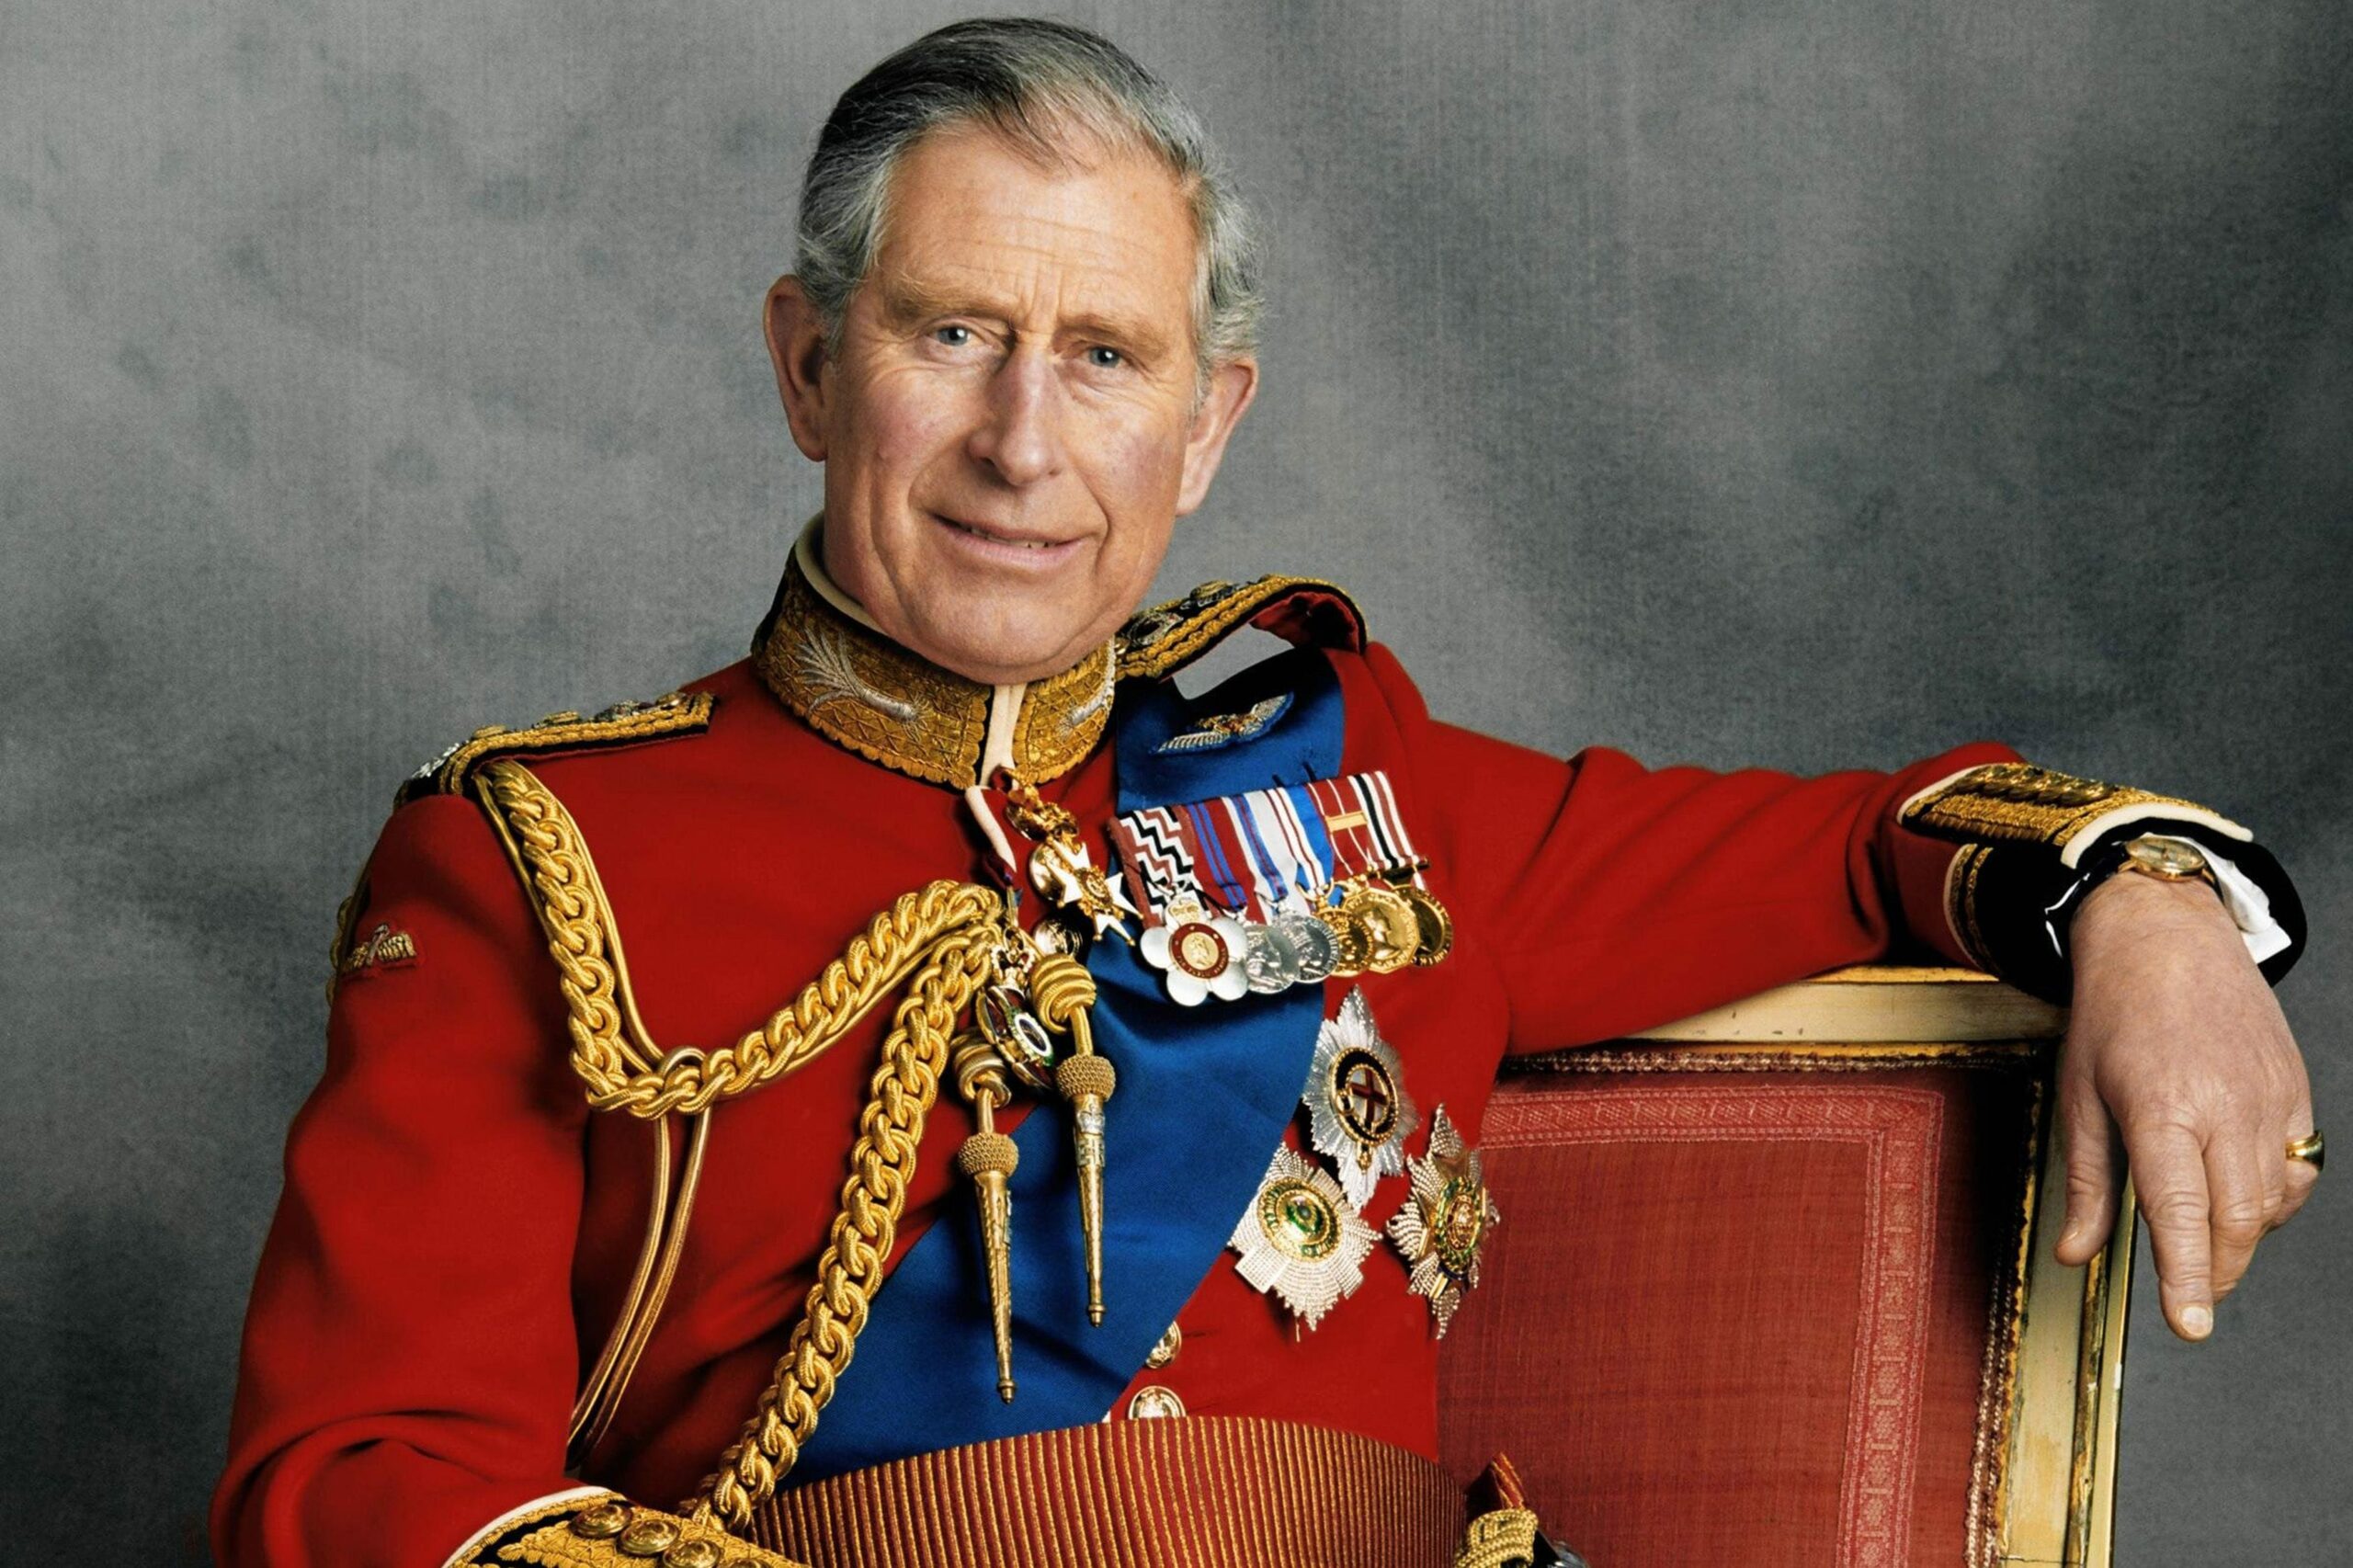 King Charles III to visit in September: media